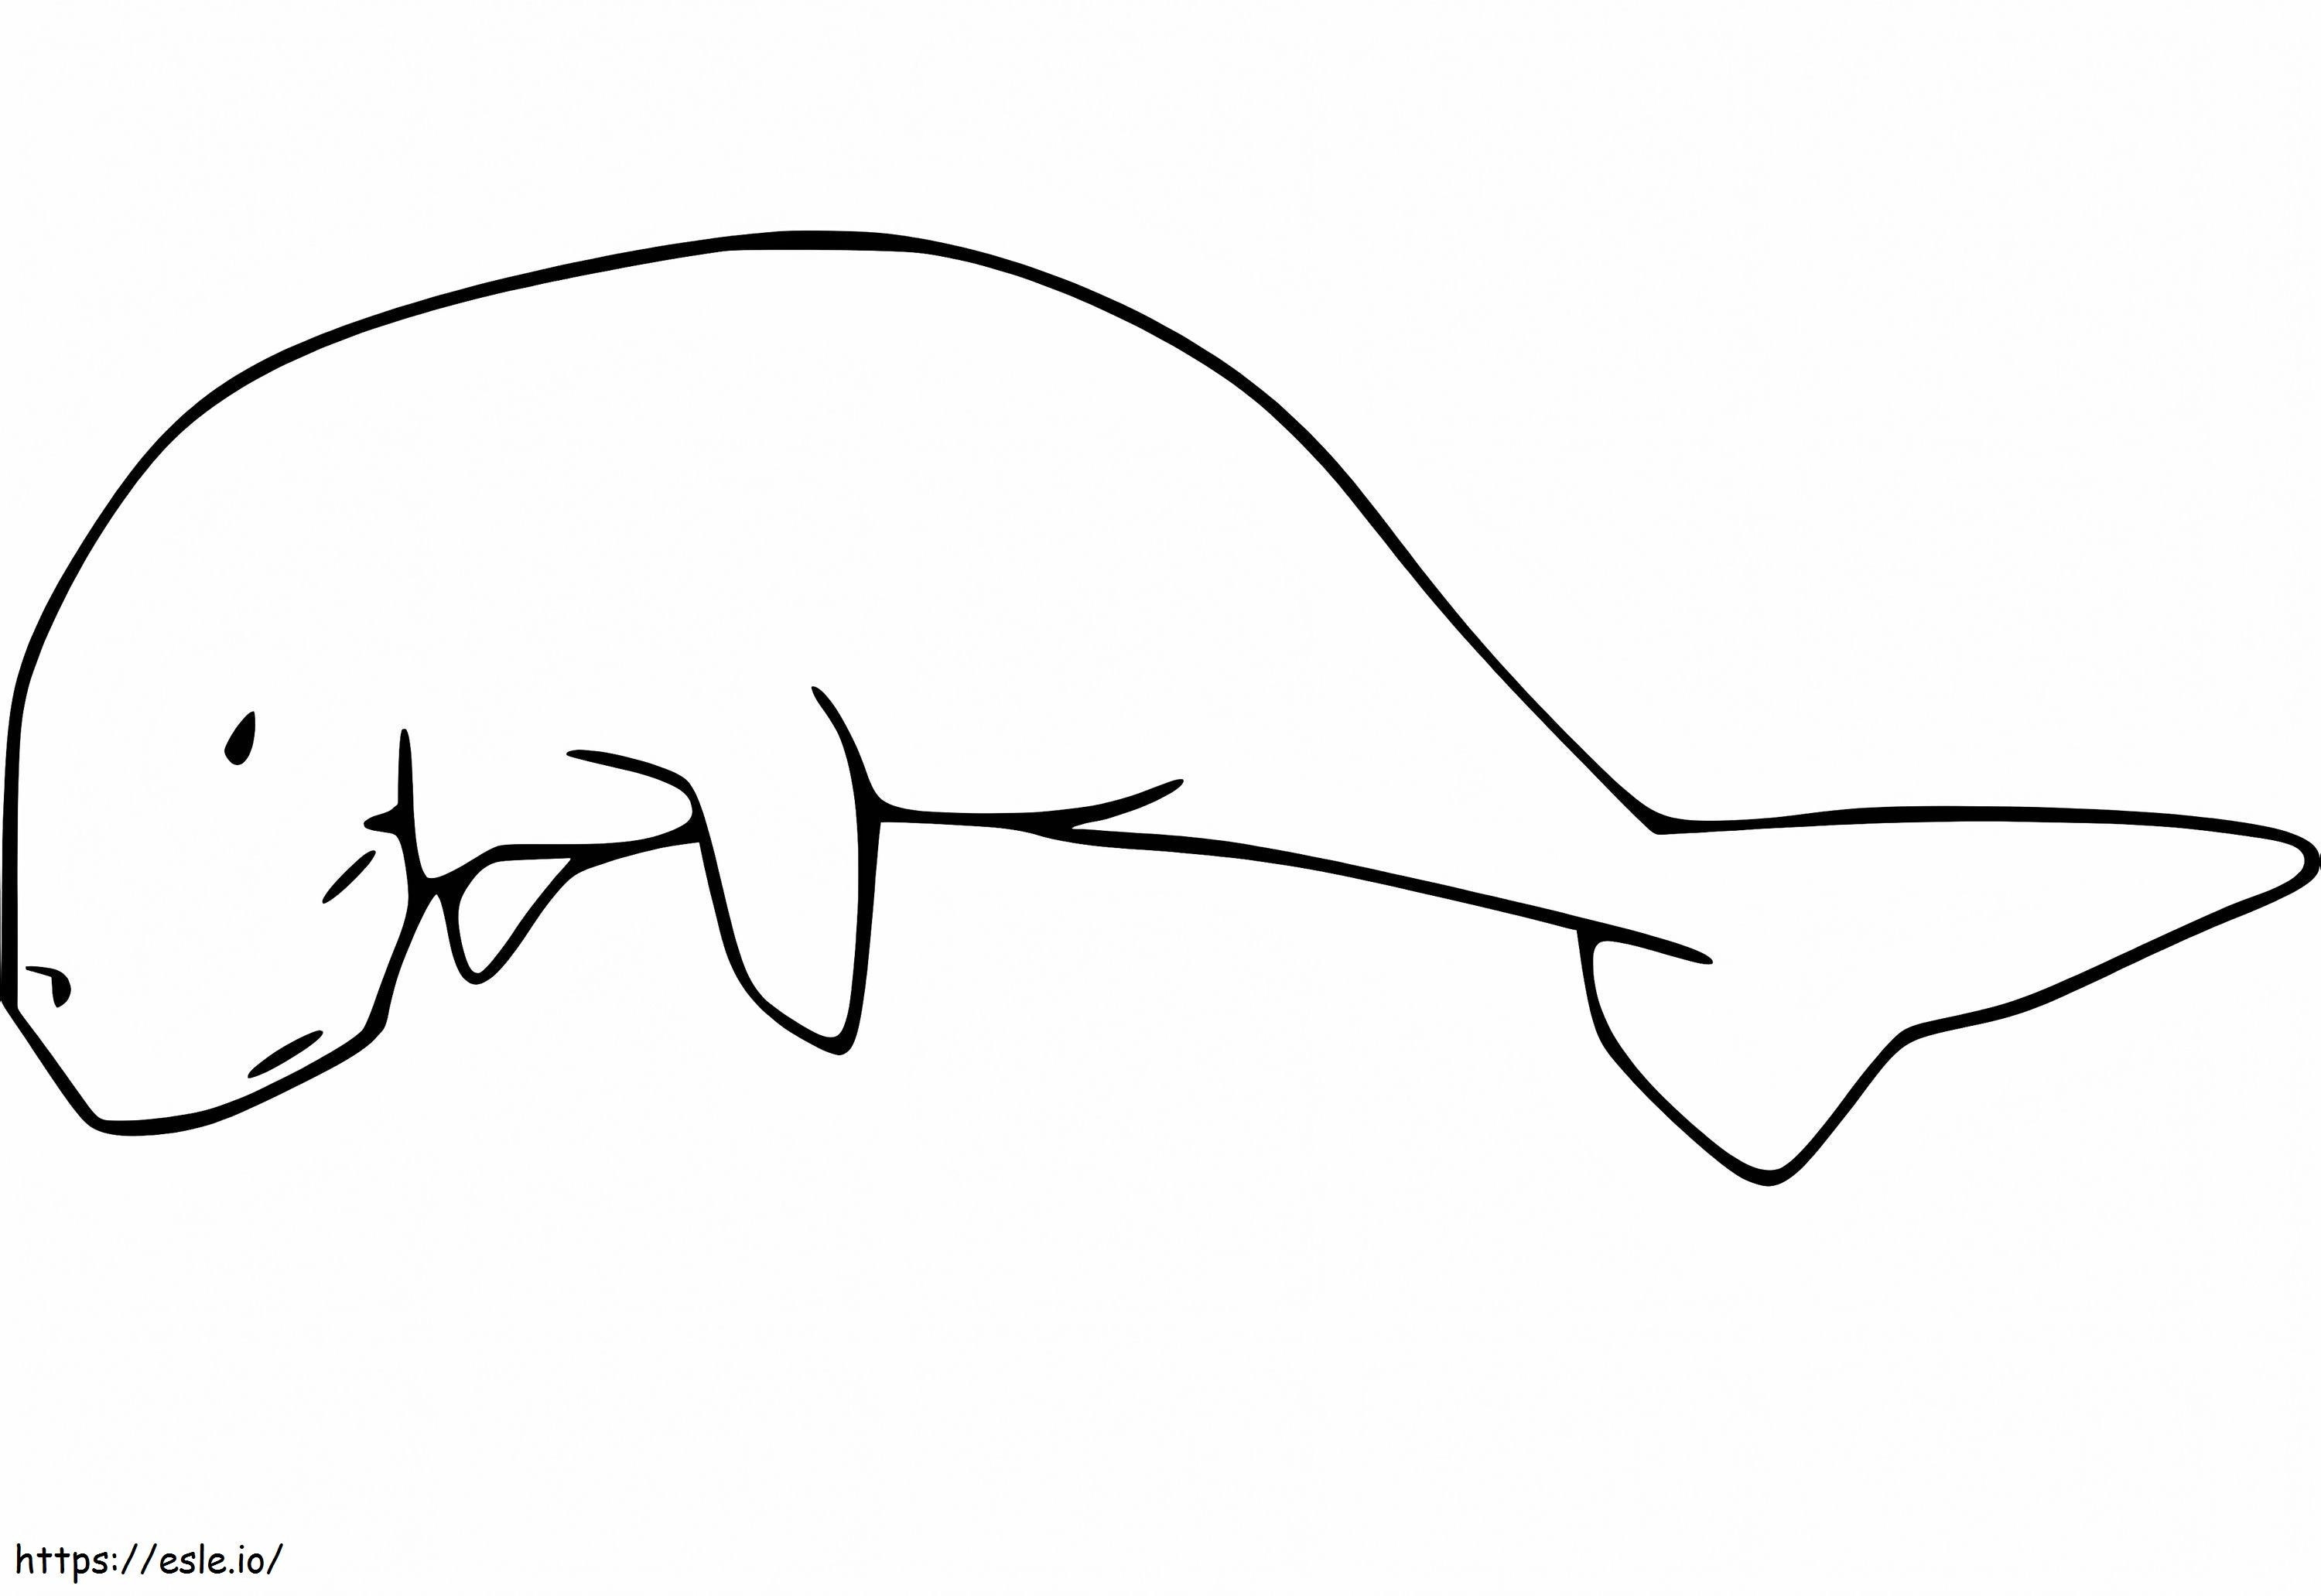 Kostenloser Dugong ausmalbilder